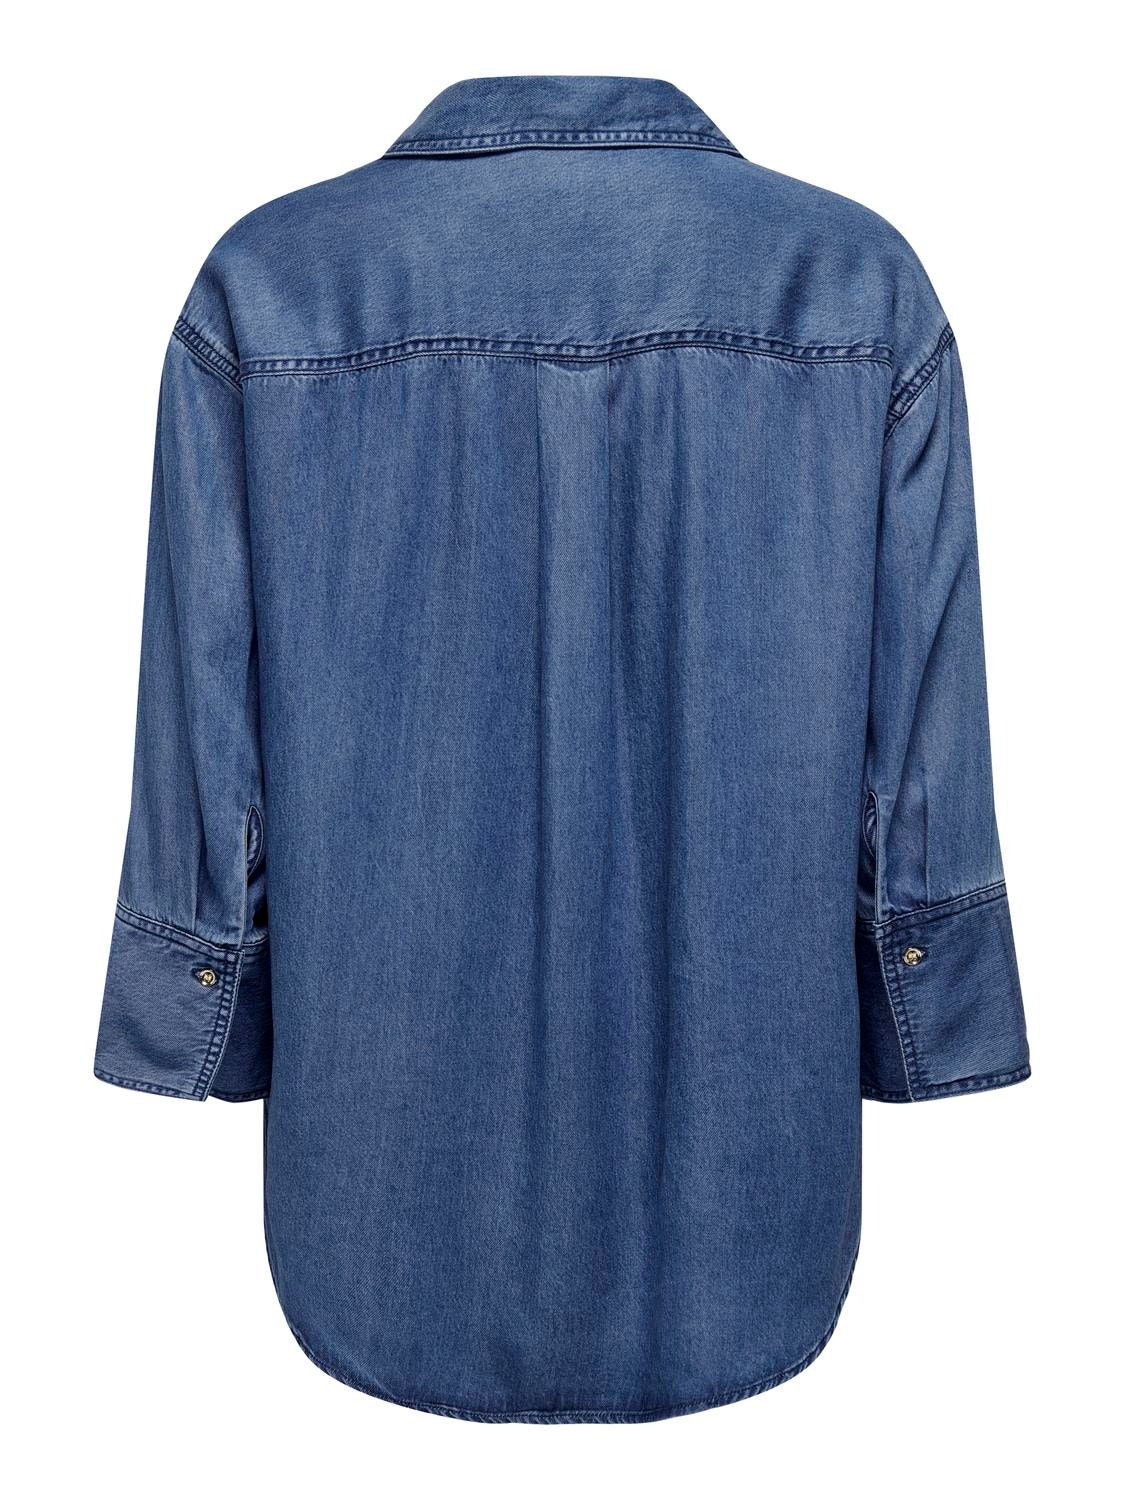 ONLY Denim shirt with china collar -Medium Blue Denim - 15305416